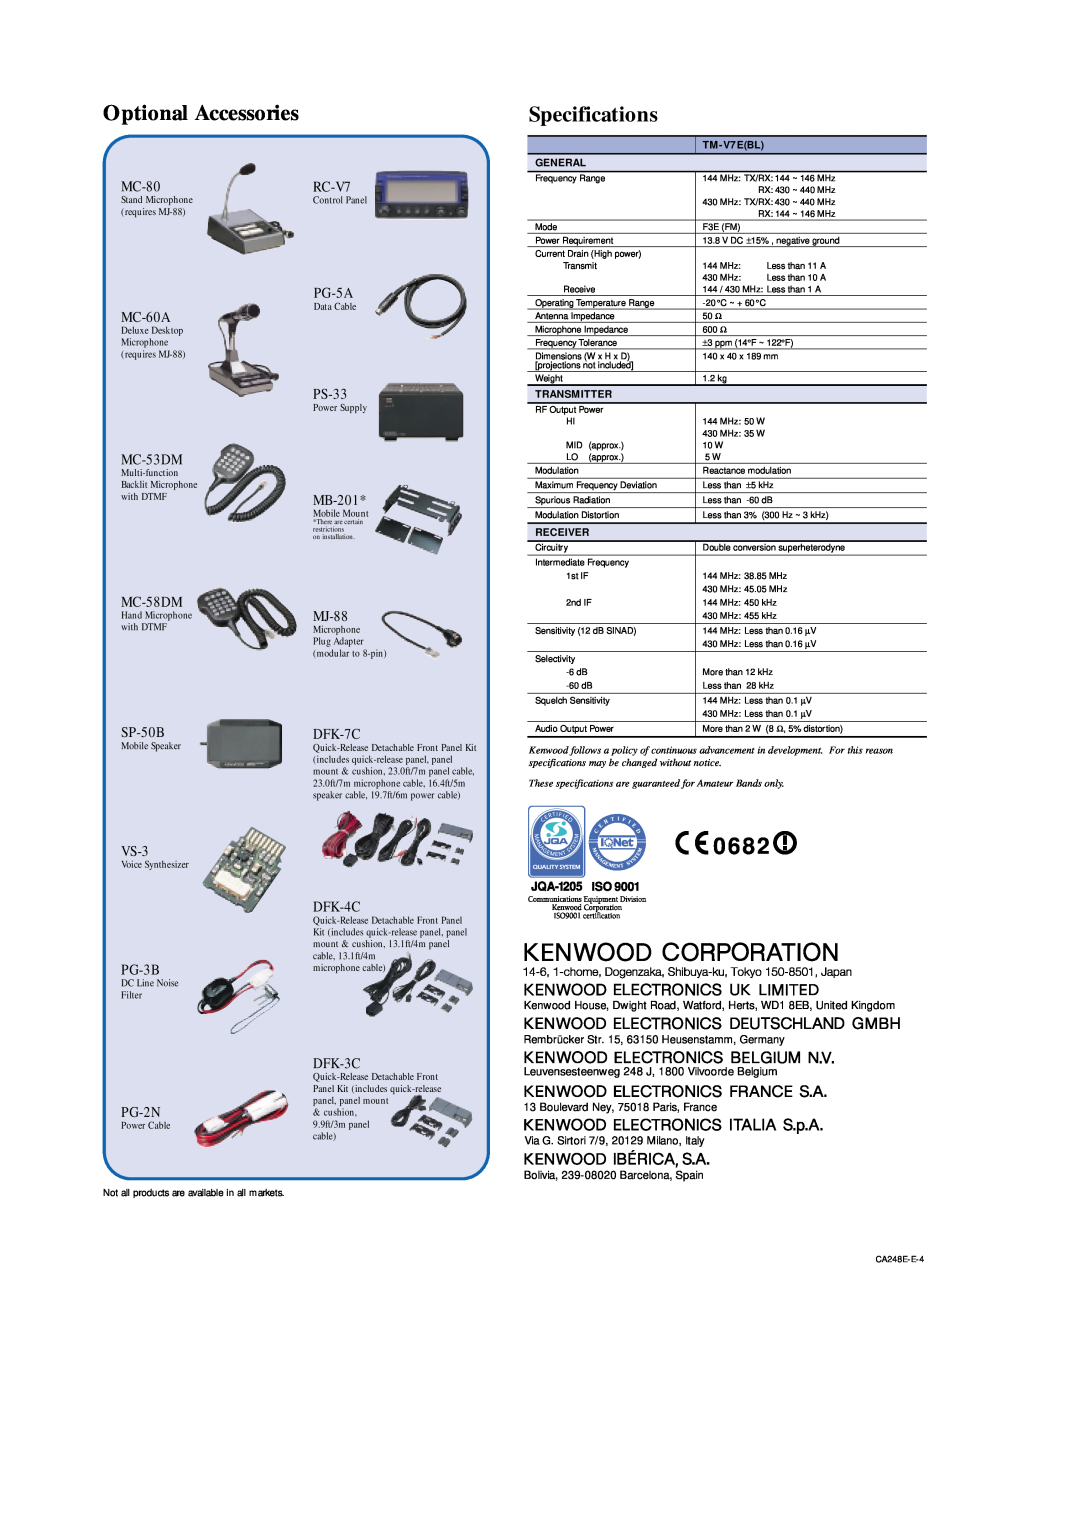 Kenwood TM-V7E(BL) 0682, Optional Accessories, Specifications, MC-80, MC-60A, MC-53DM, MC-58DM, SP-50B, RC-V7, PG-5A, VS-3 